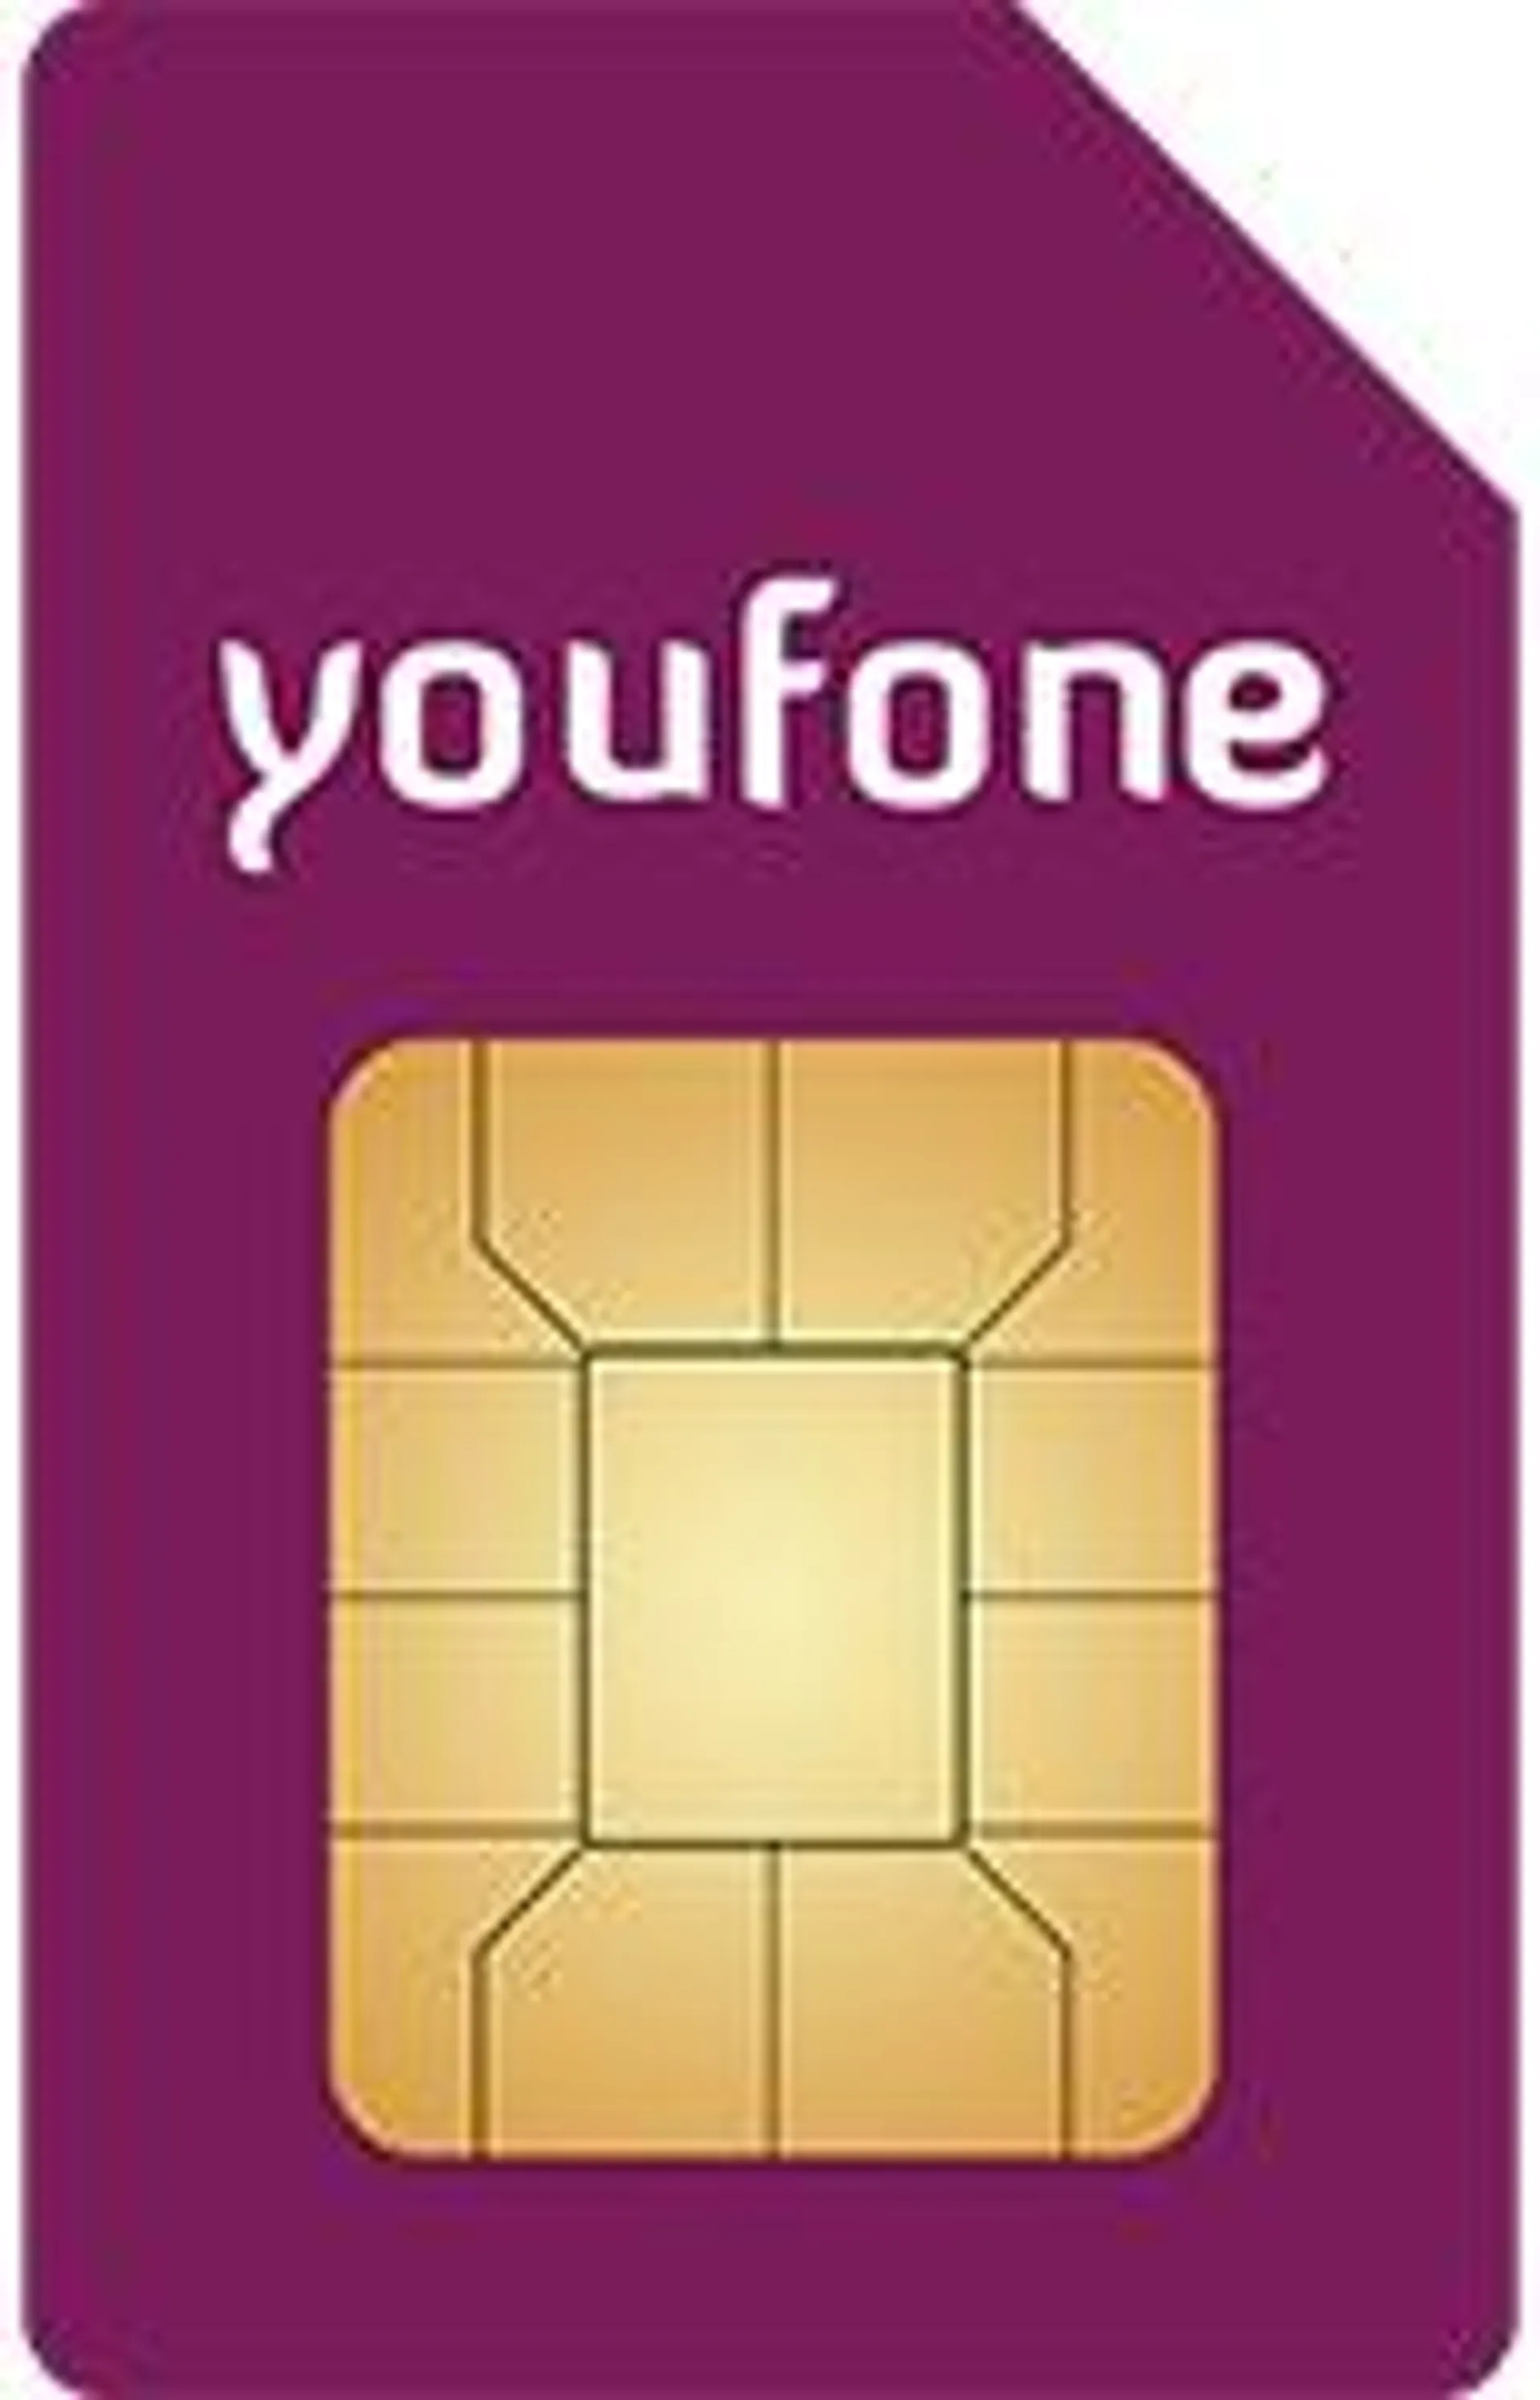 Youfone 200 min/sms + 7GB 5G - 2 jaar - Sim Only